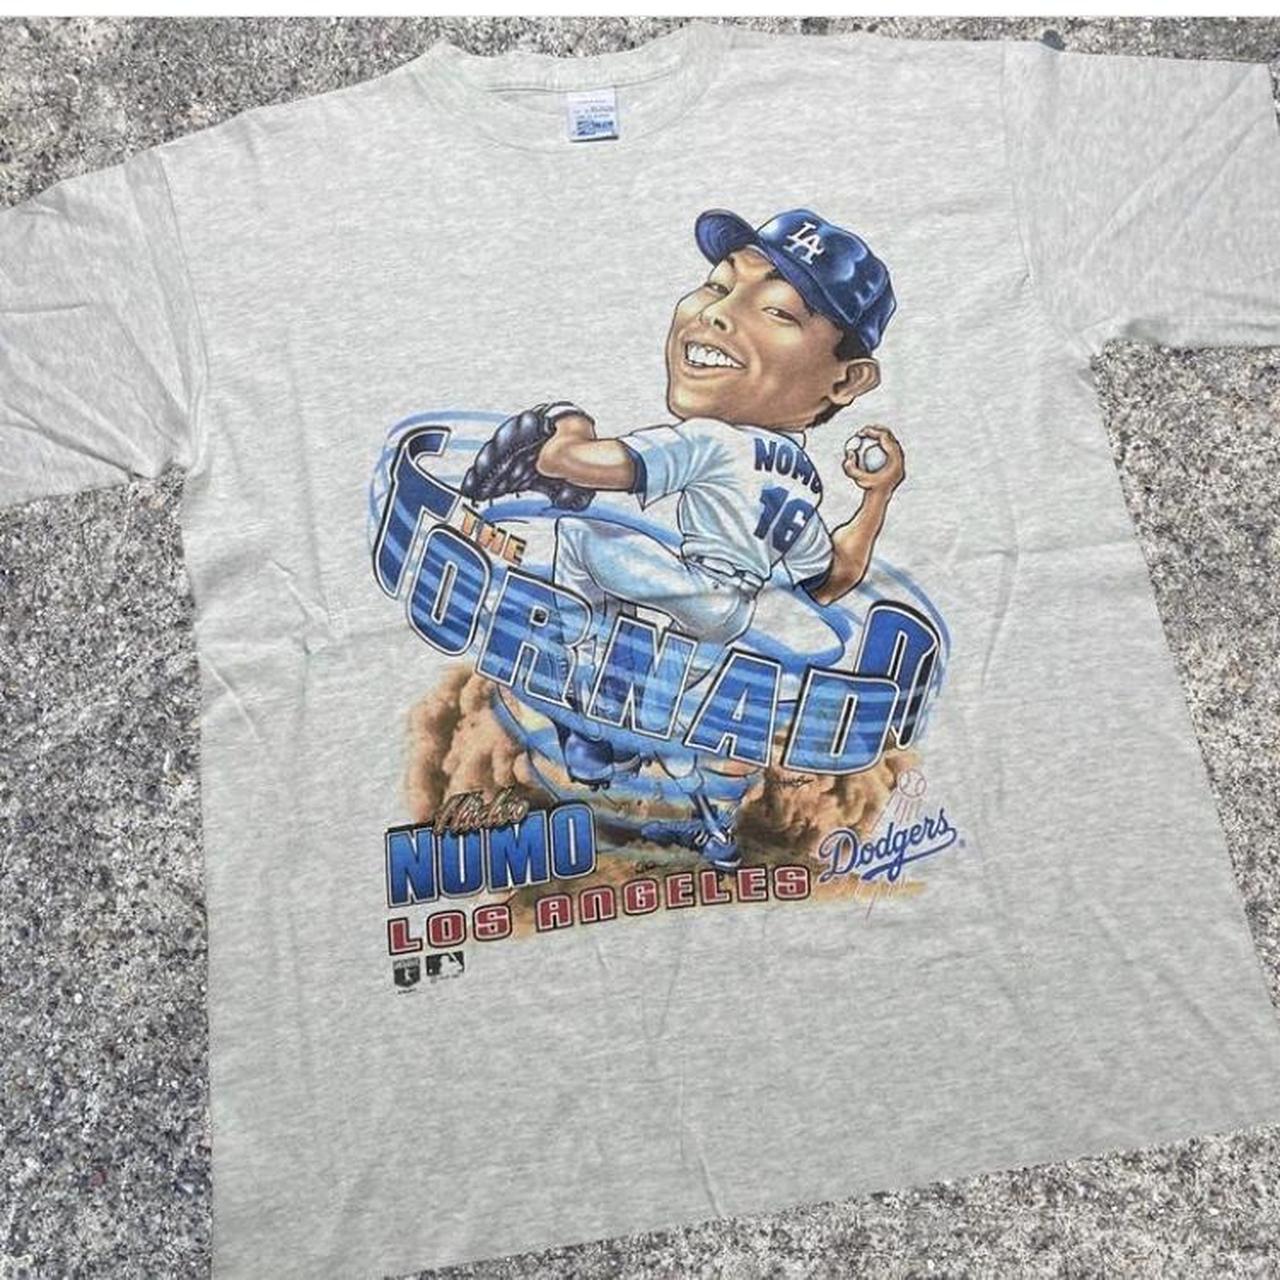 Vintage 1995 Los Angeles Dodgers Hideo Nomo Salem Sportswear T